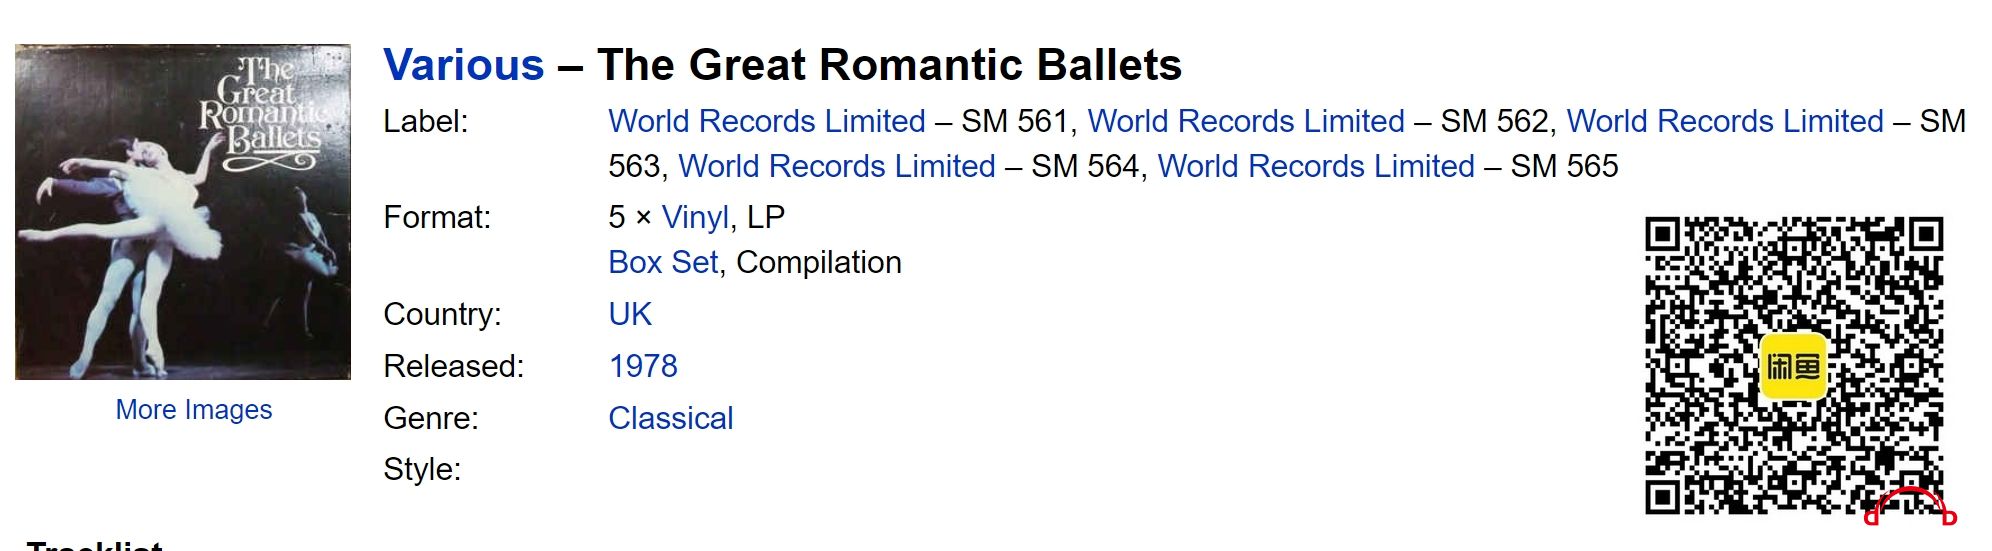 The Great Romantic Ballets.jpg